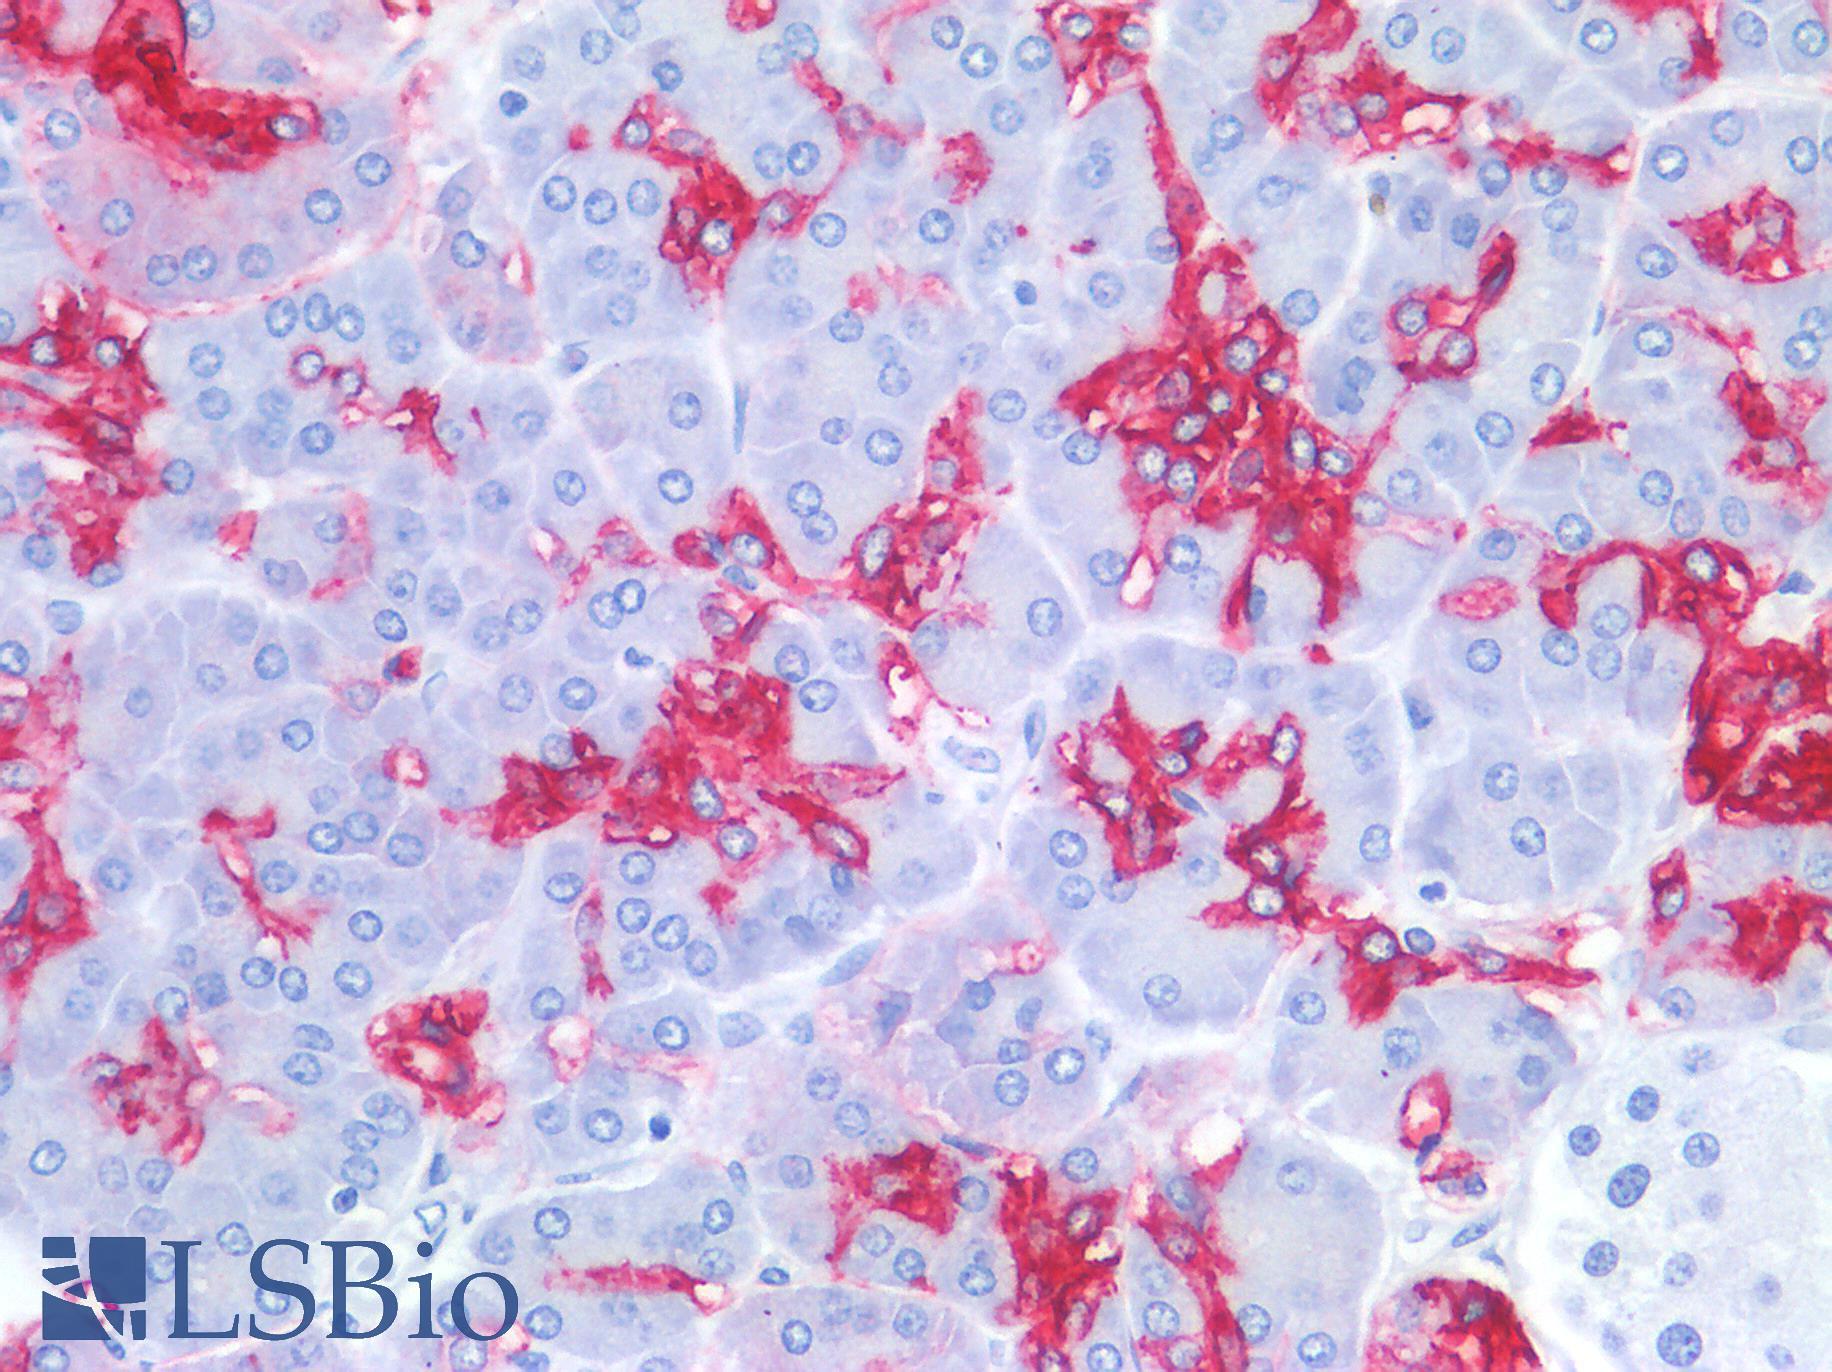 Sialylated Lewis a / CA 19-9 Antibody - Human Spleen: Formalin-Fixed, Paraffin-Embedded (FFPE)